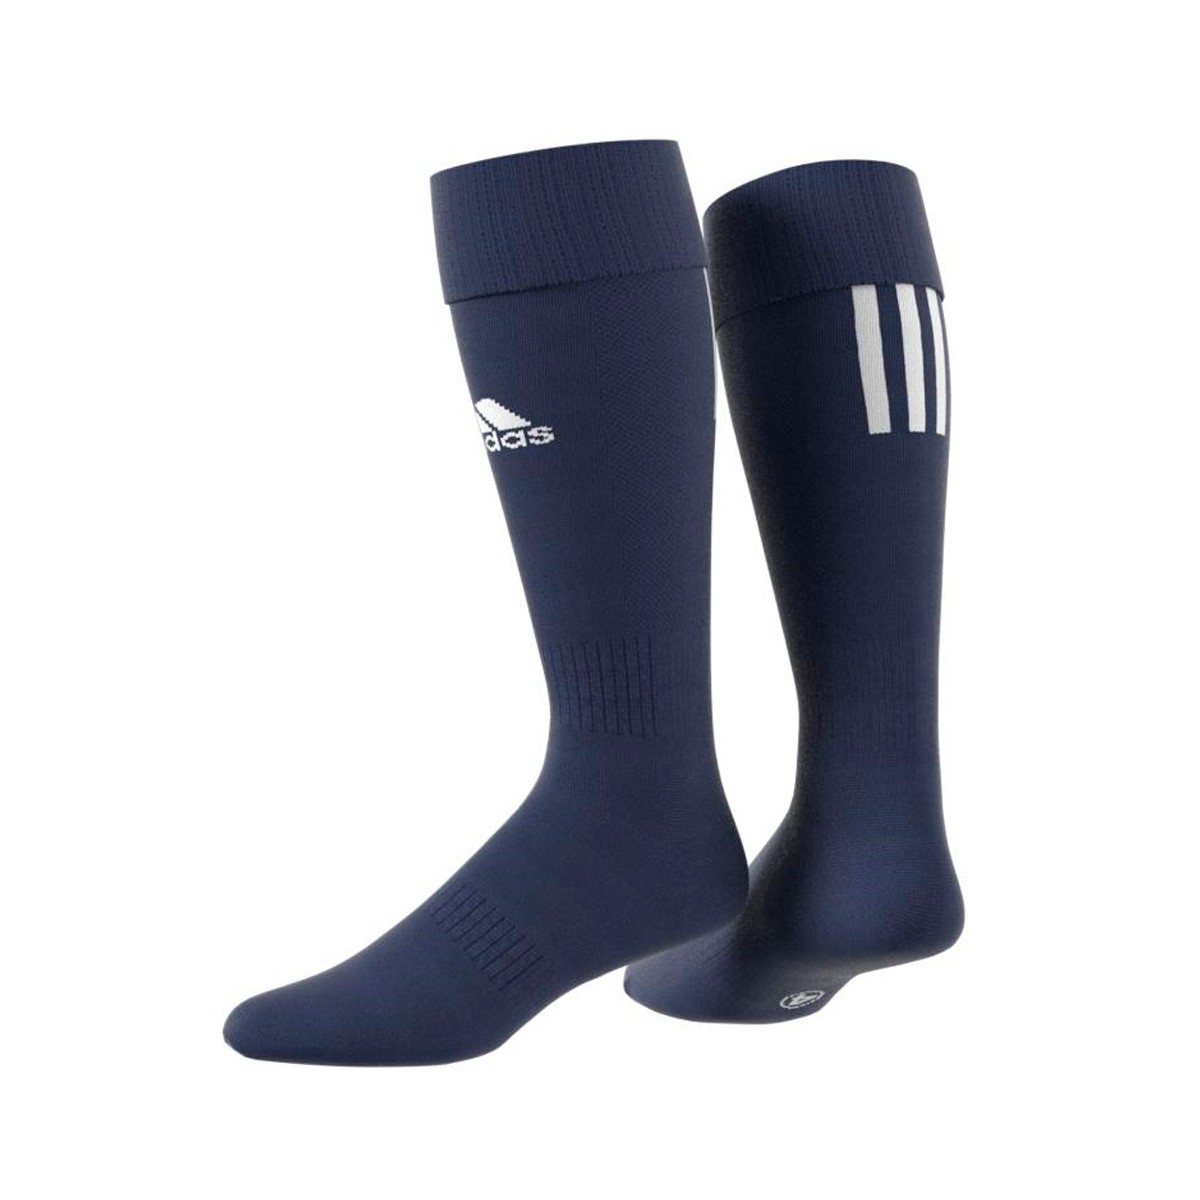 navy adidas football socks